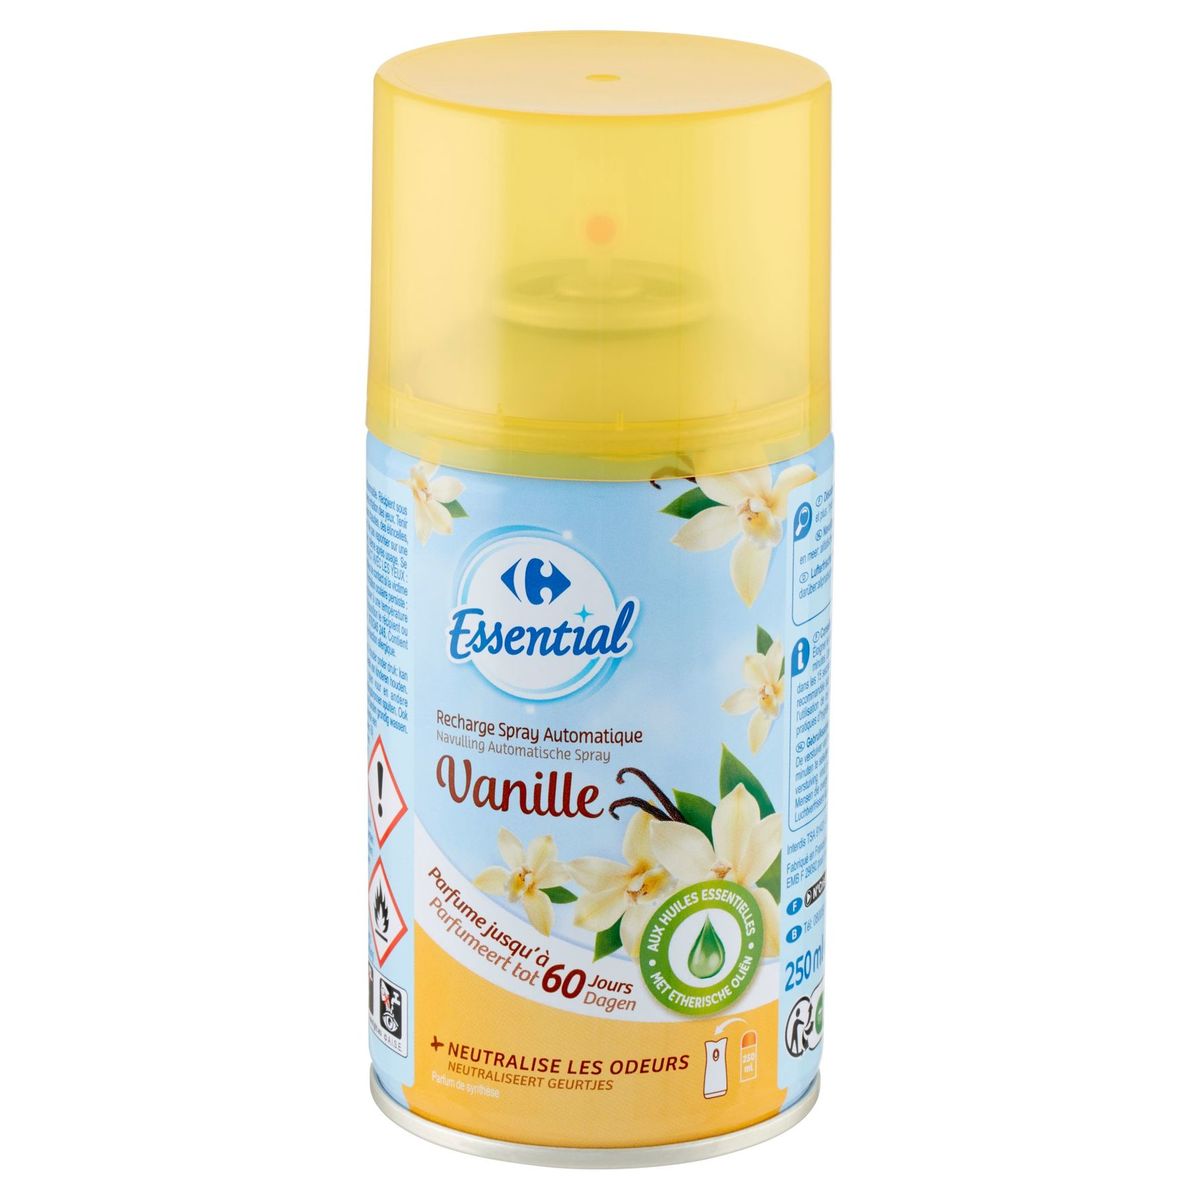 Carrefour Essential Recharge Spray Automatique Vanille 250 ml